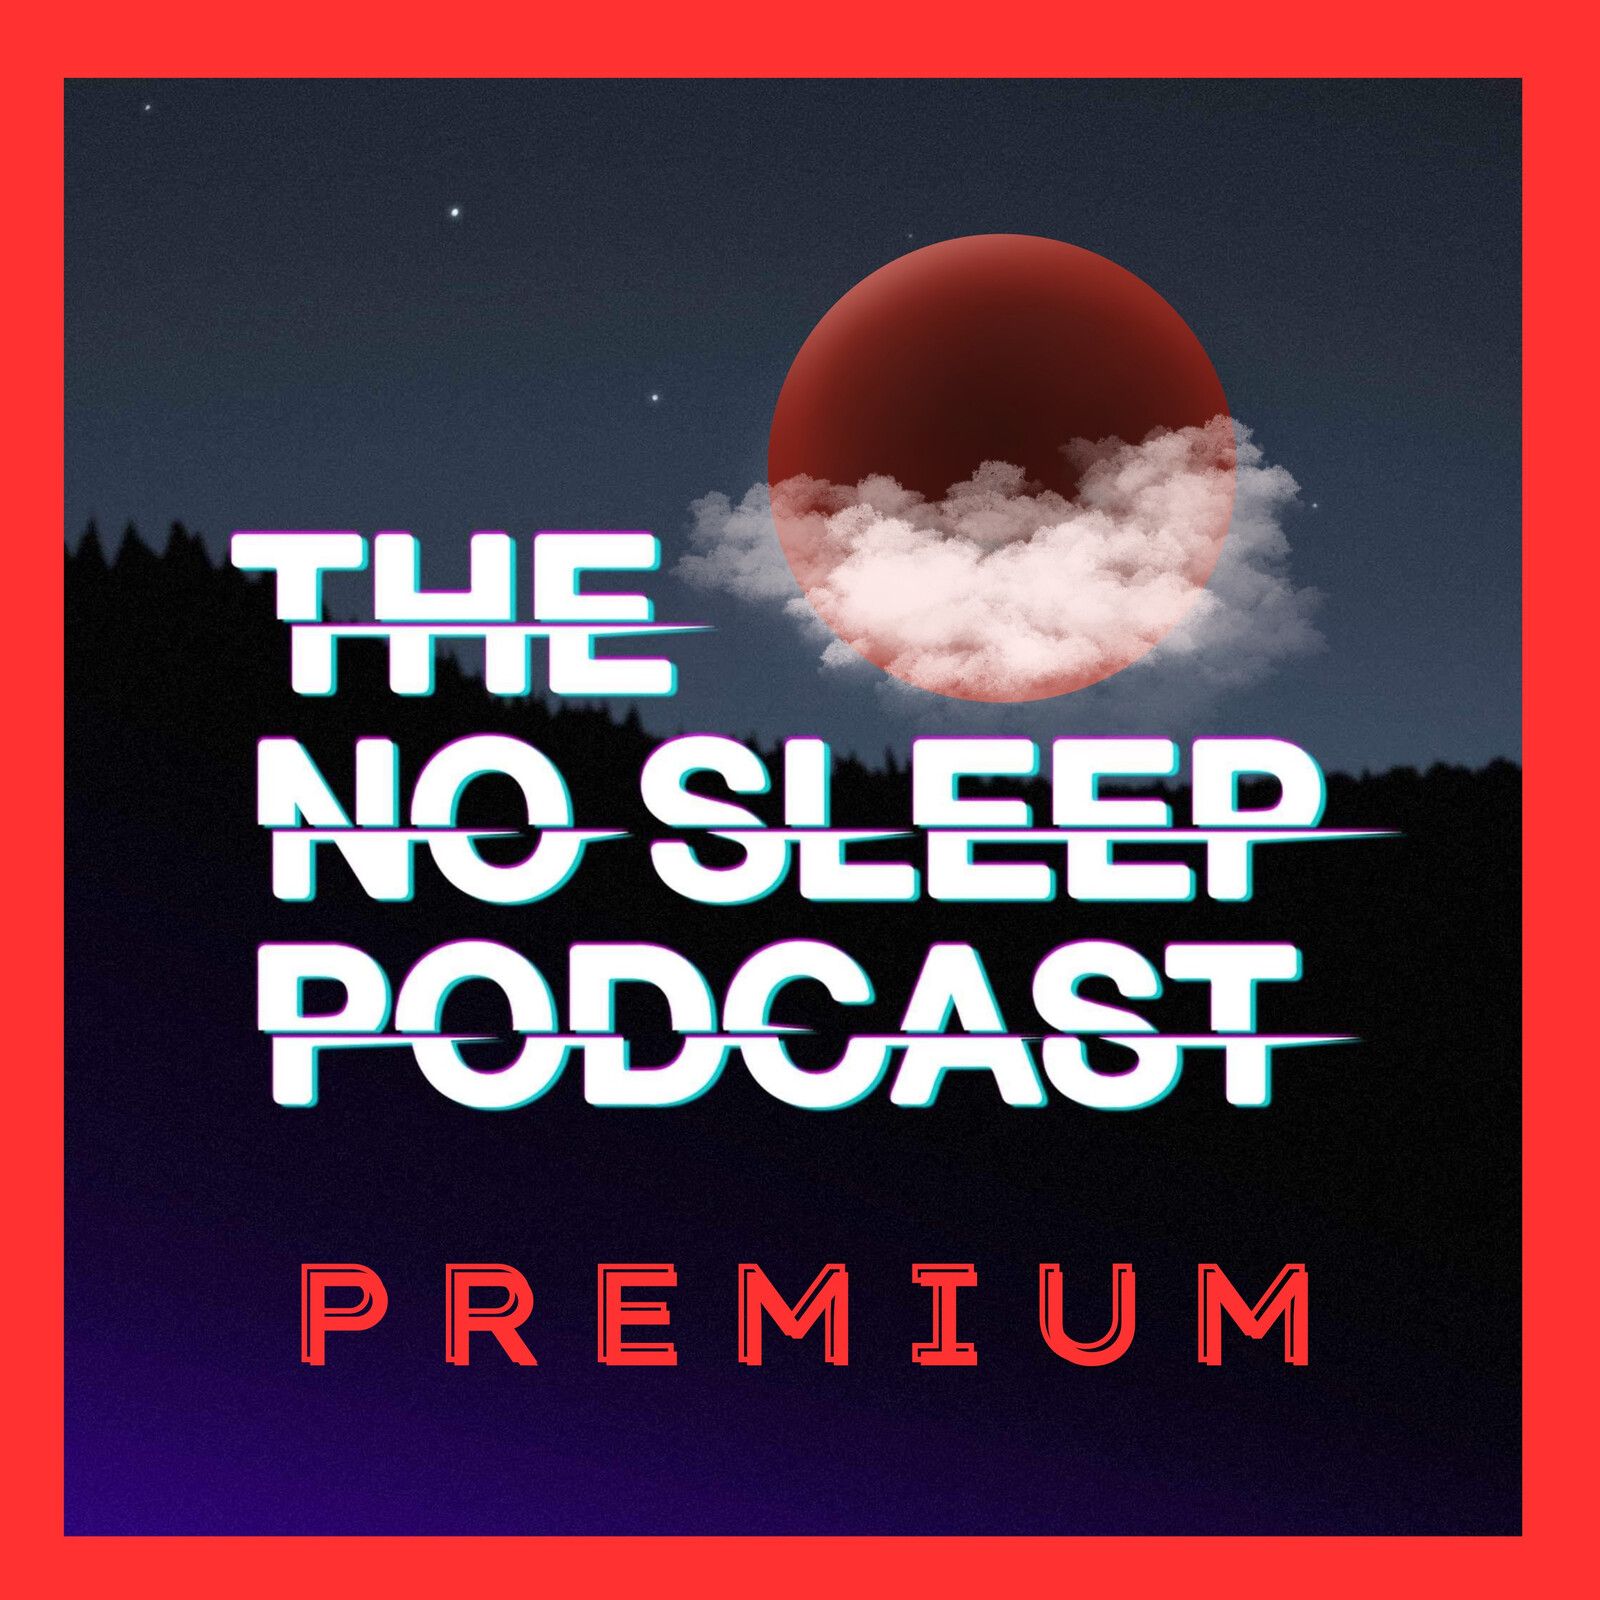 "The NoSleep Podcast" Podcast